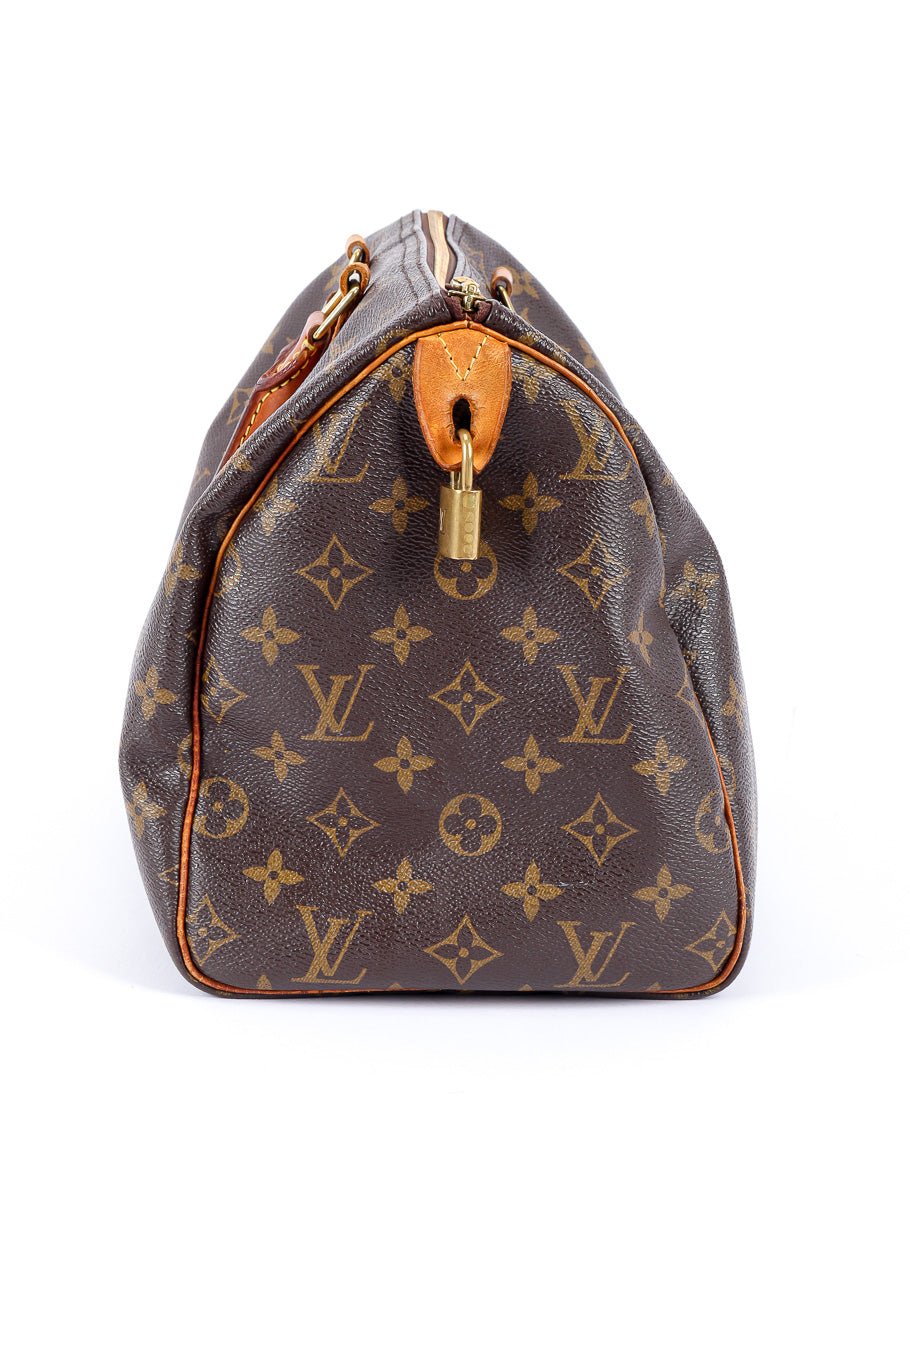 Vintage Louis Vuitton Classic Monogram Speedy 30 Bag II side view @Recessla